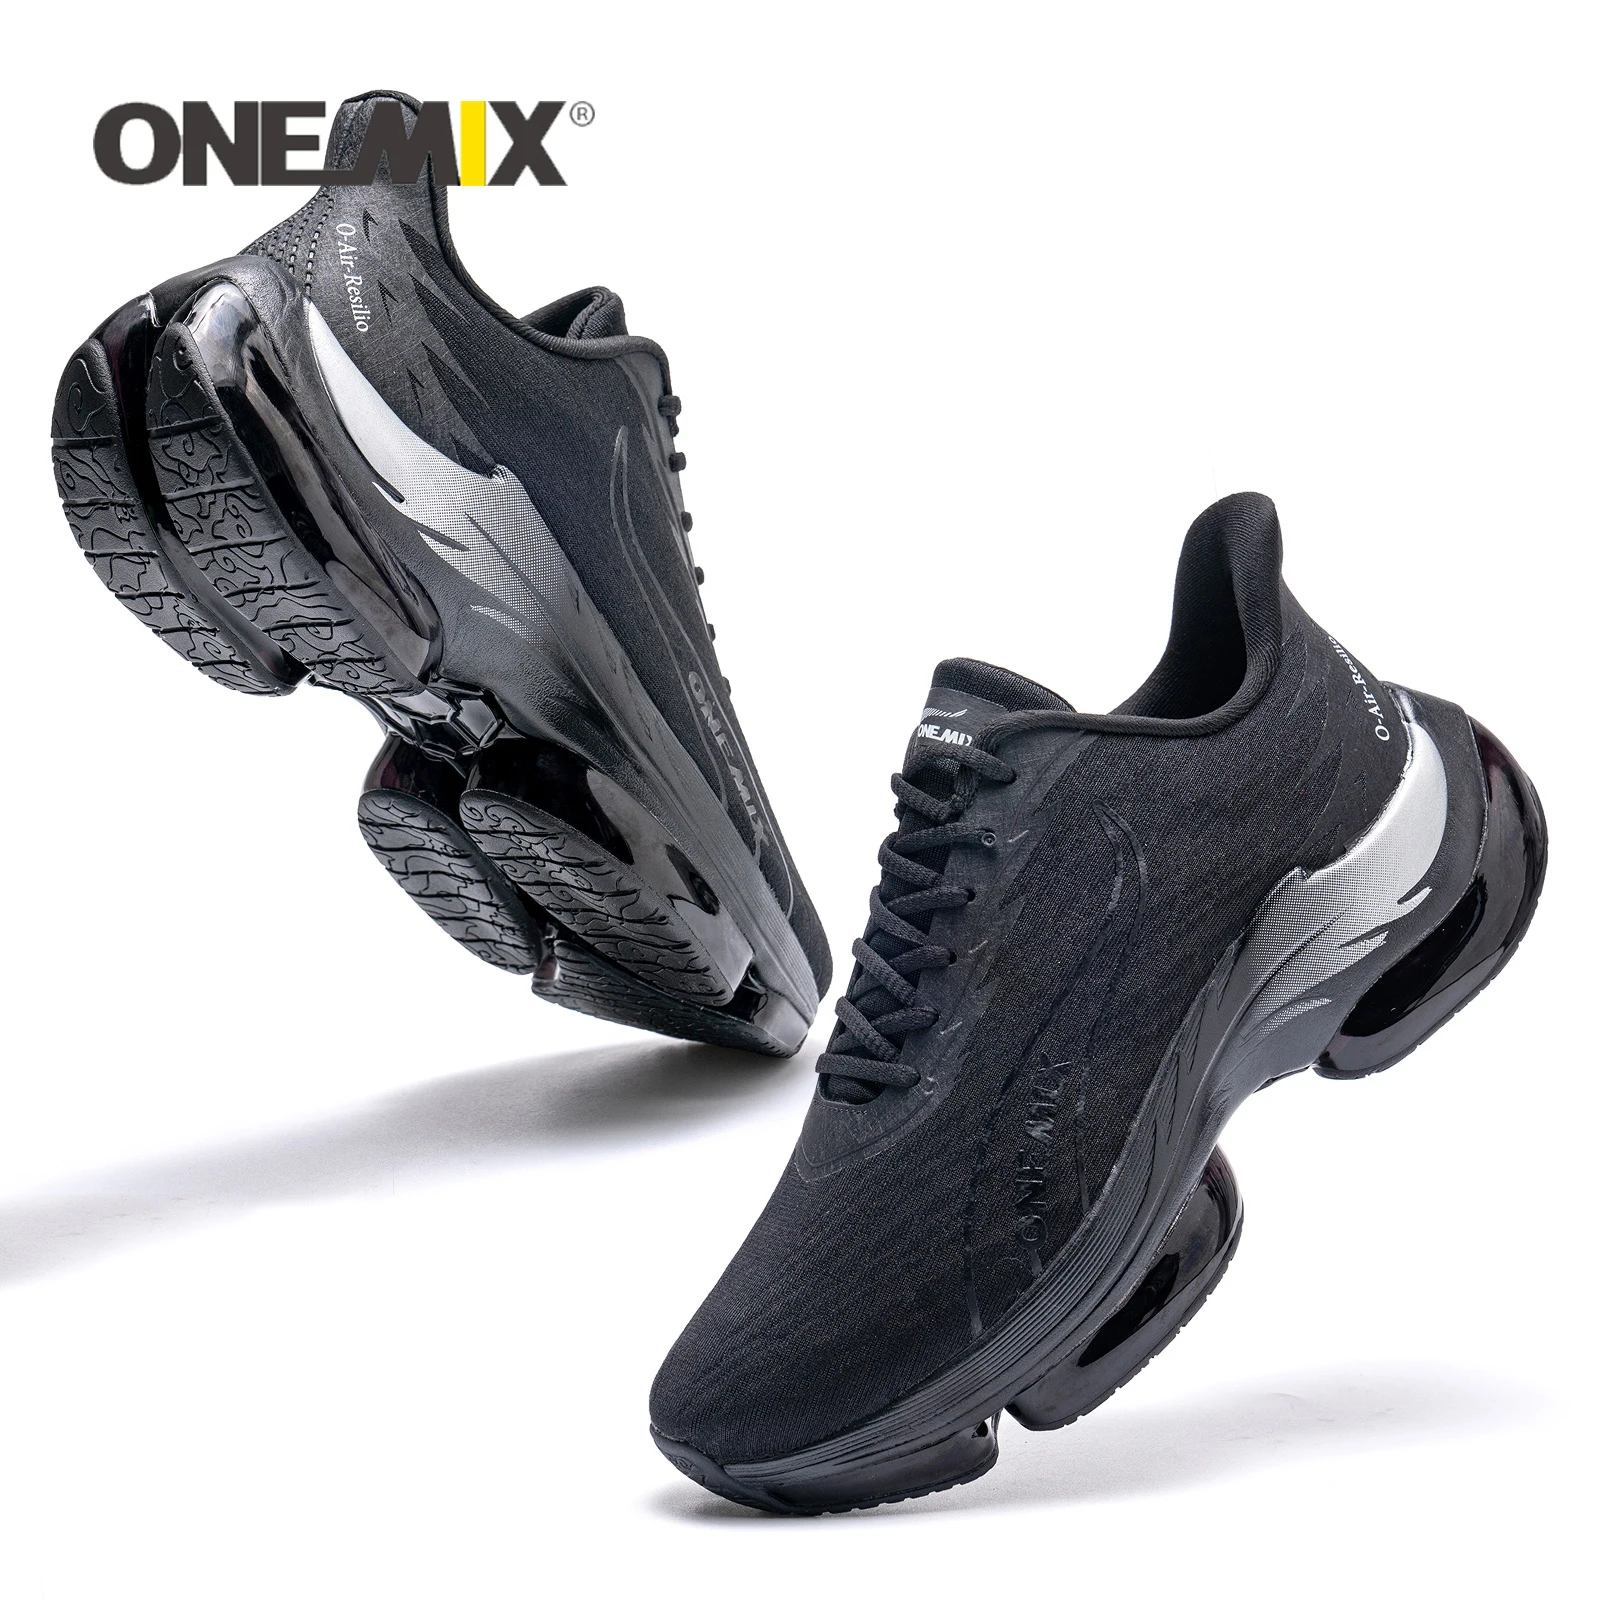 Onemix men's running shoes breathable hommes sport chaussures de course outdoor athletic walking sneakers plus size 35-47 shoes